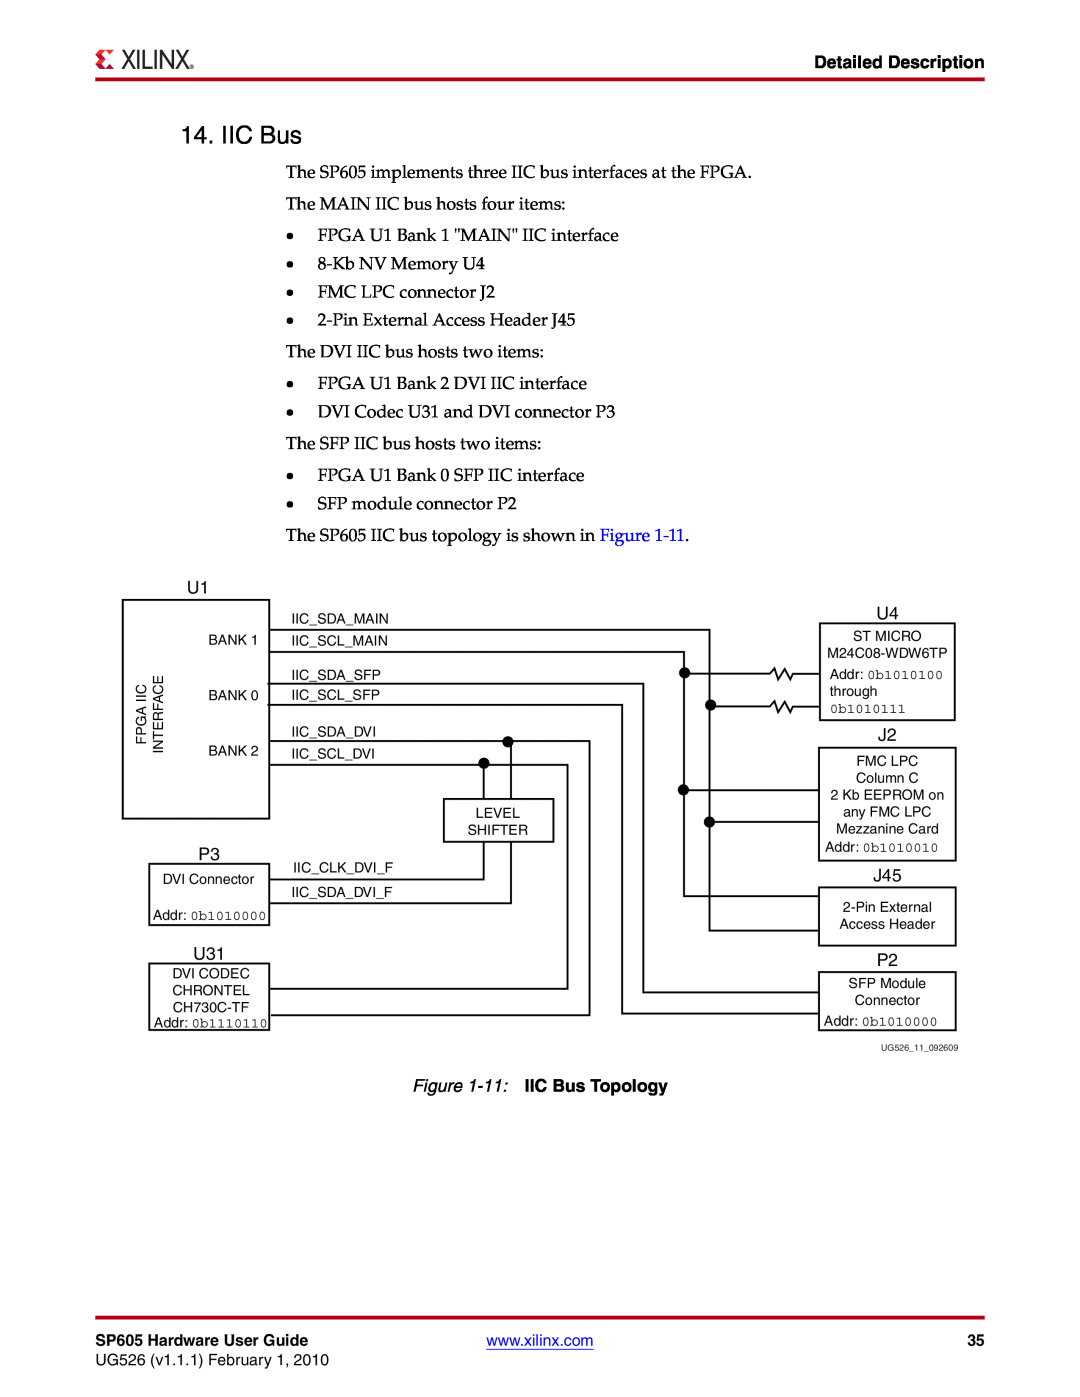 Xilinx SP605 manual 11 IIC Bus Topology, Detailed Description 